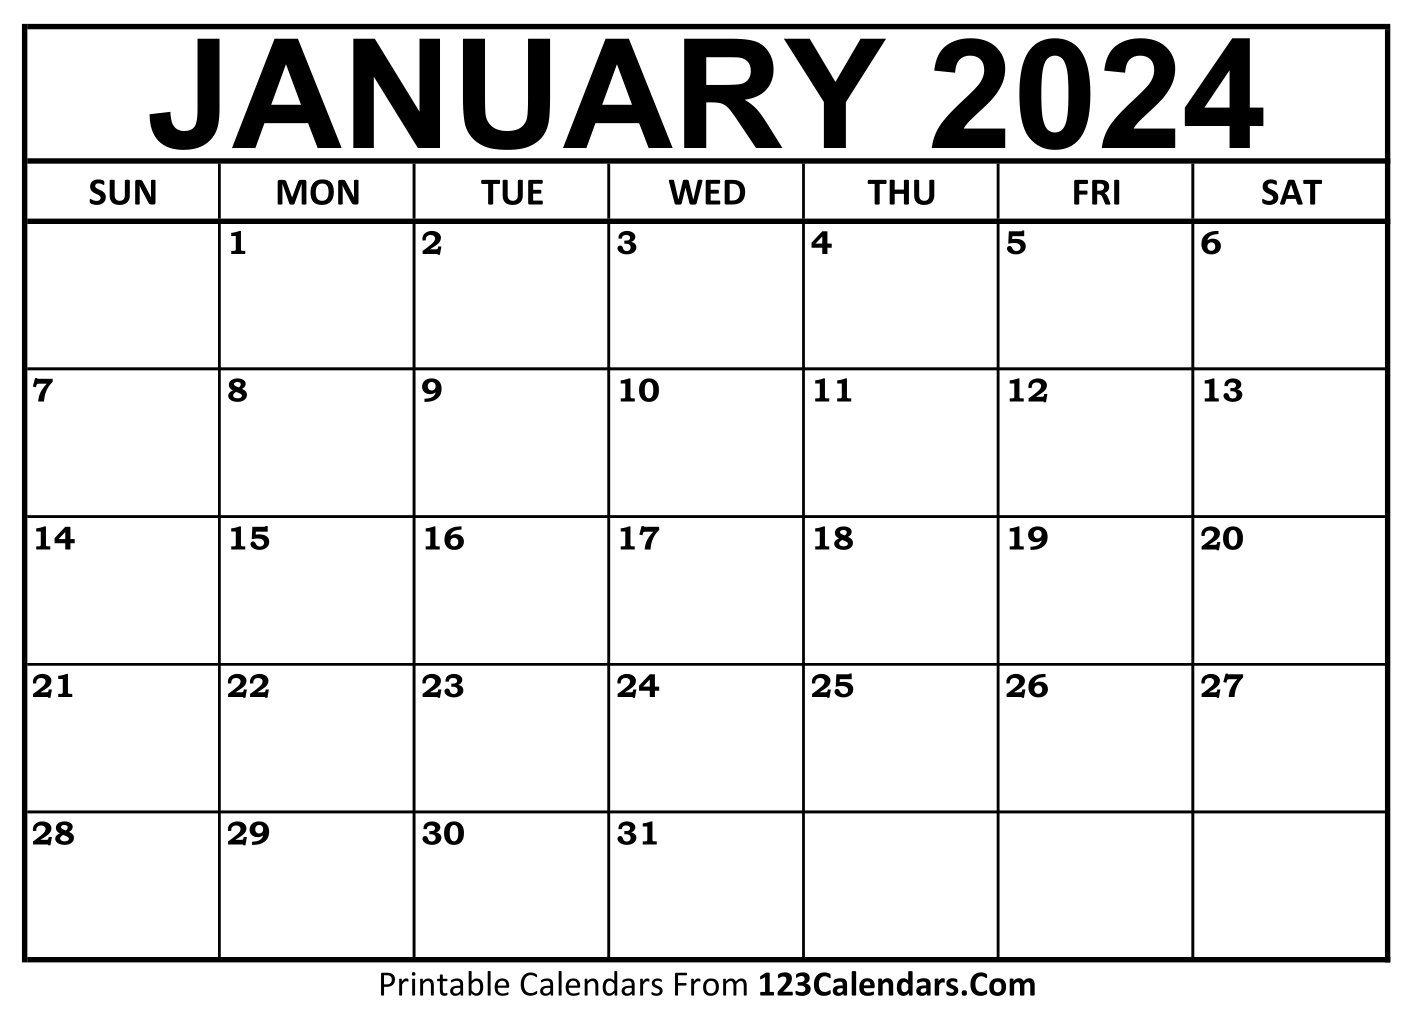 Printable January 2024 Calendar Templates - 123Calendars | January Printable Calendar 2024